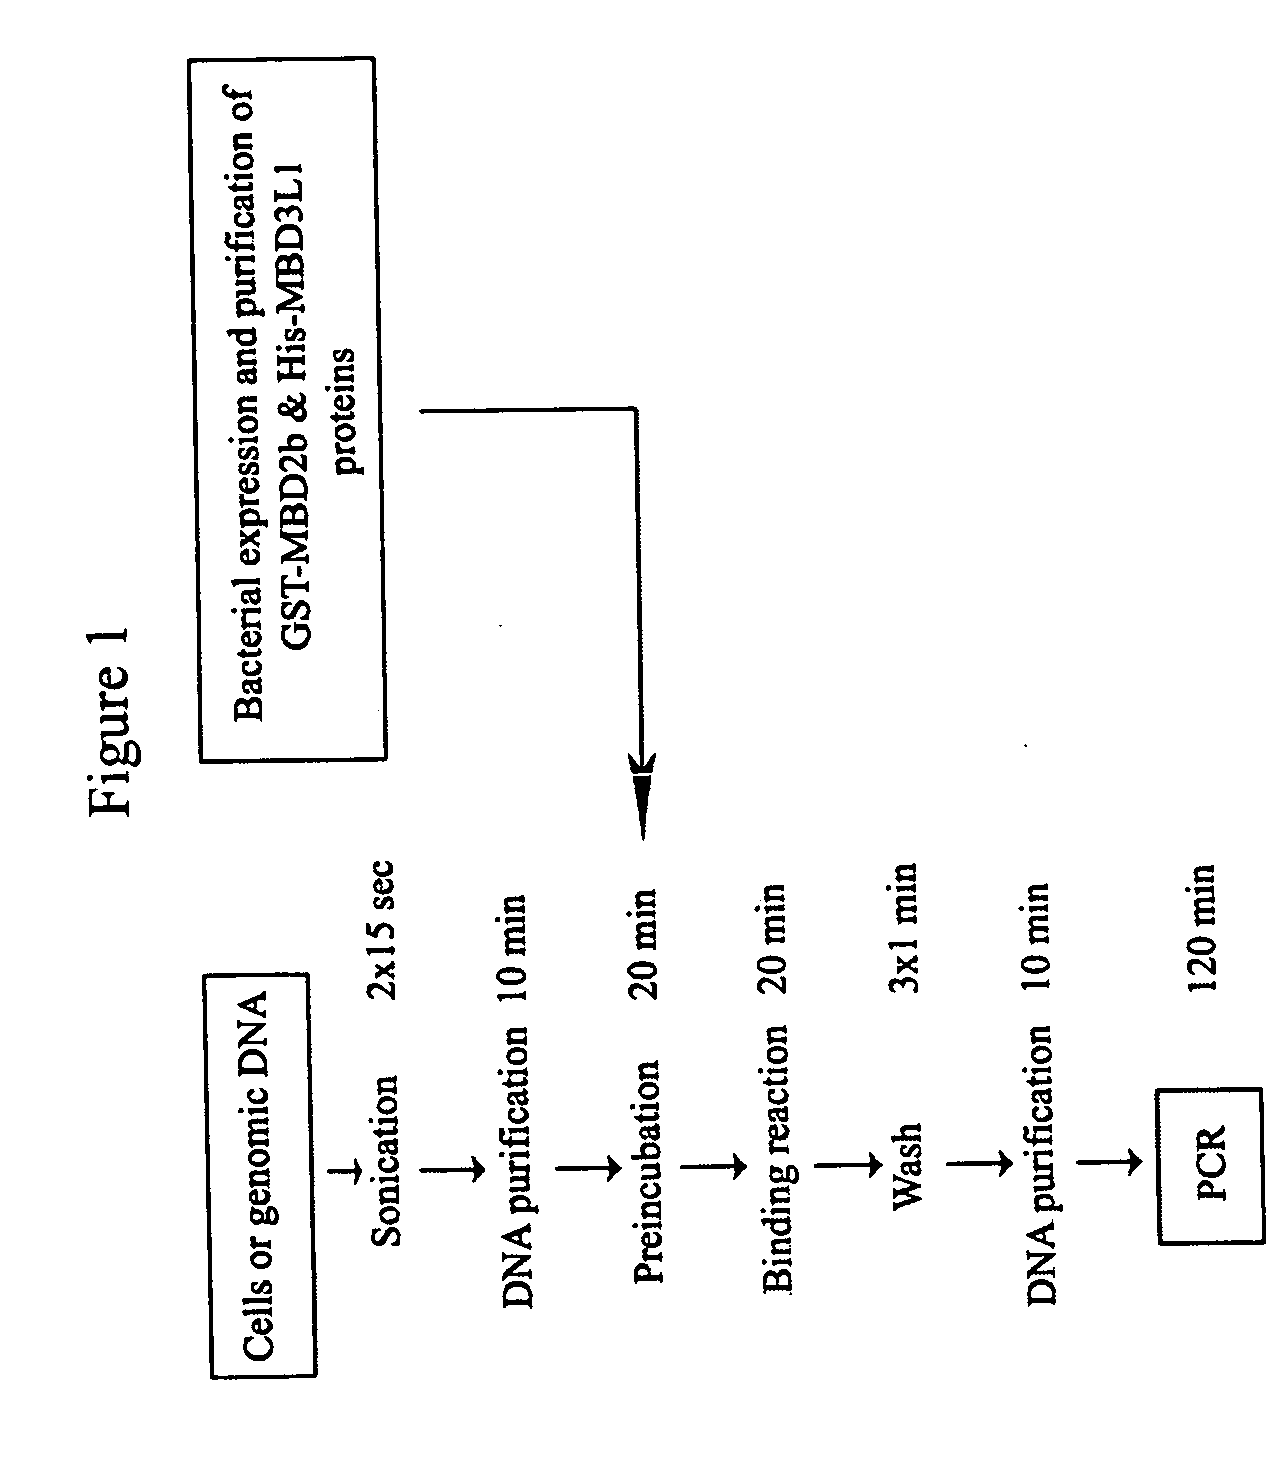 Method for detecting methylated CpG islands